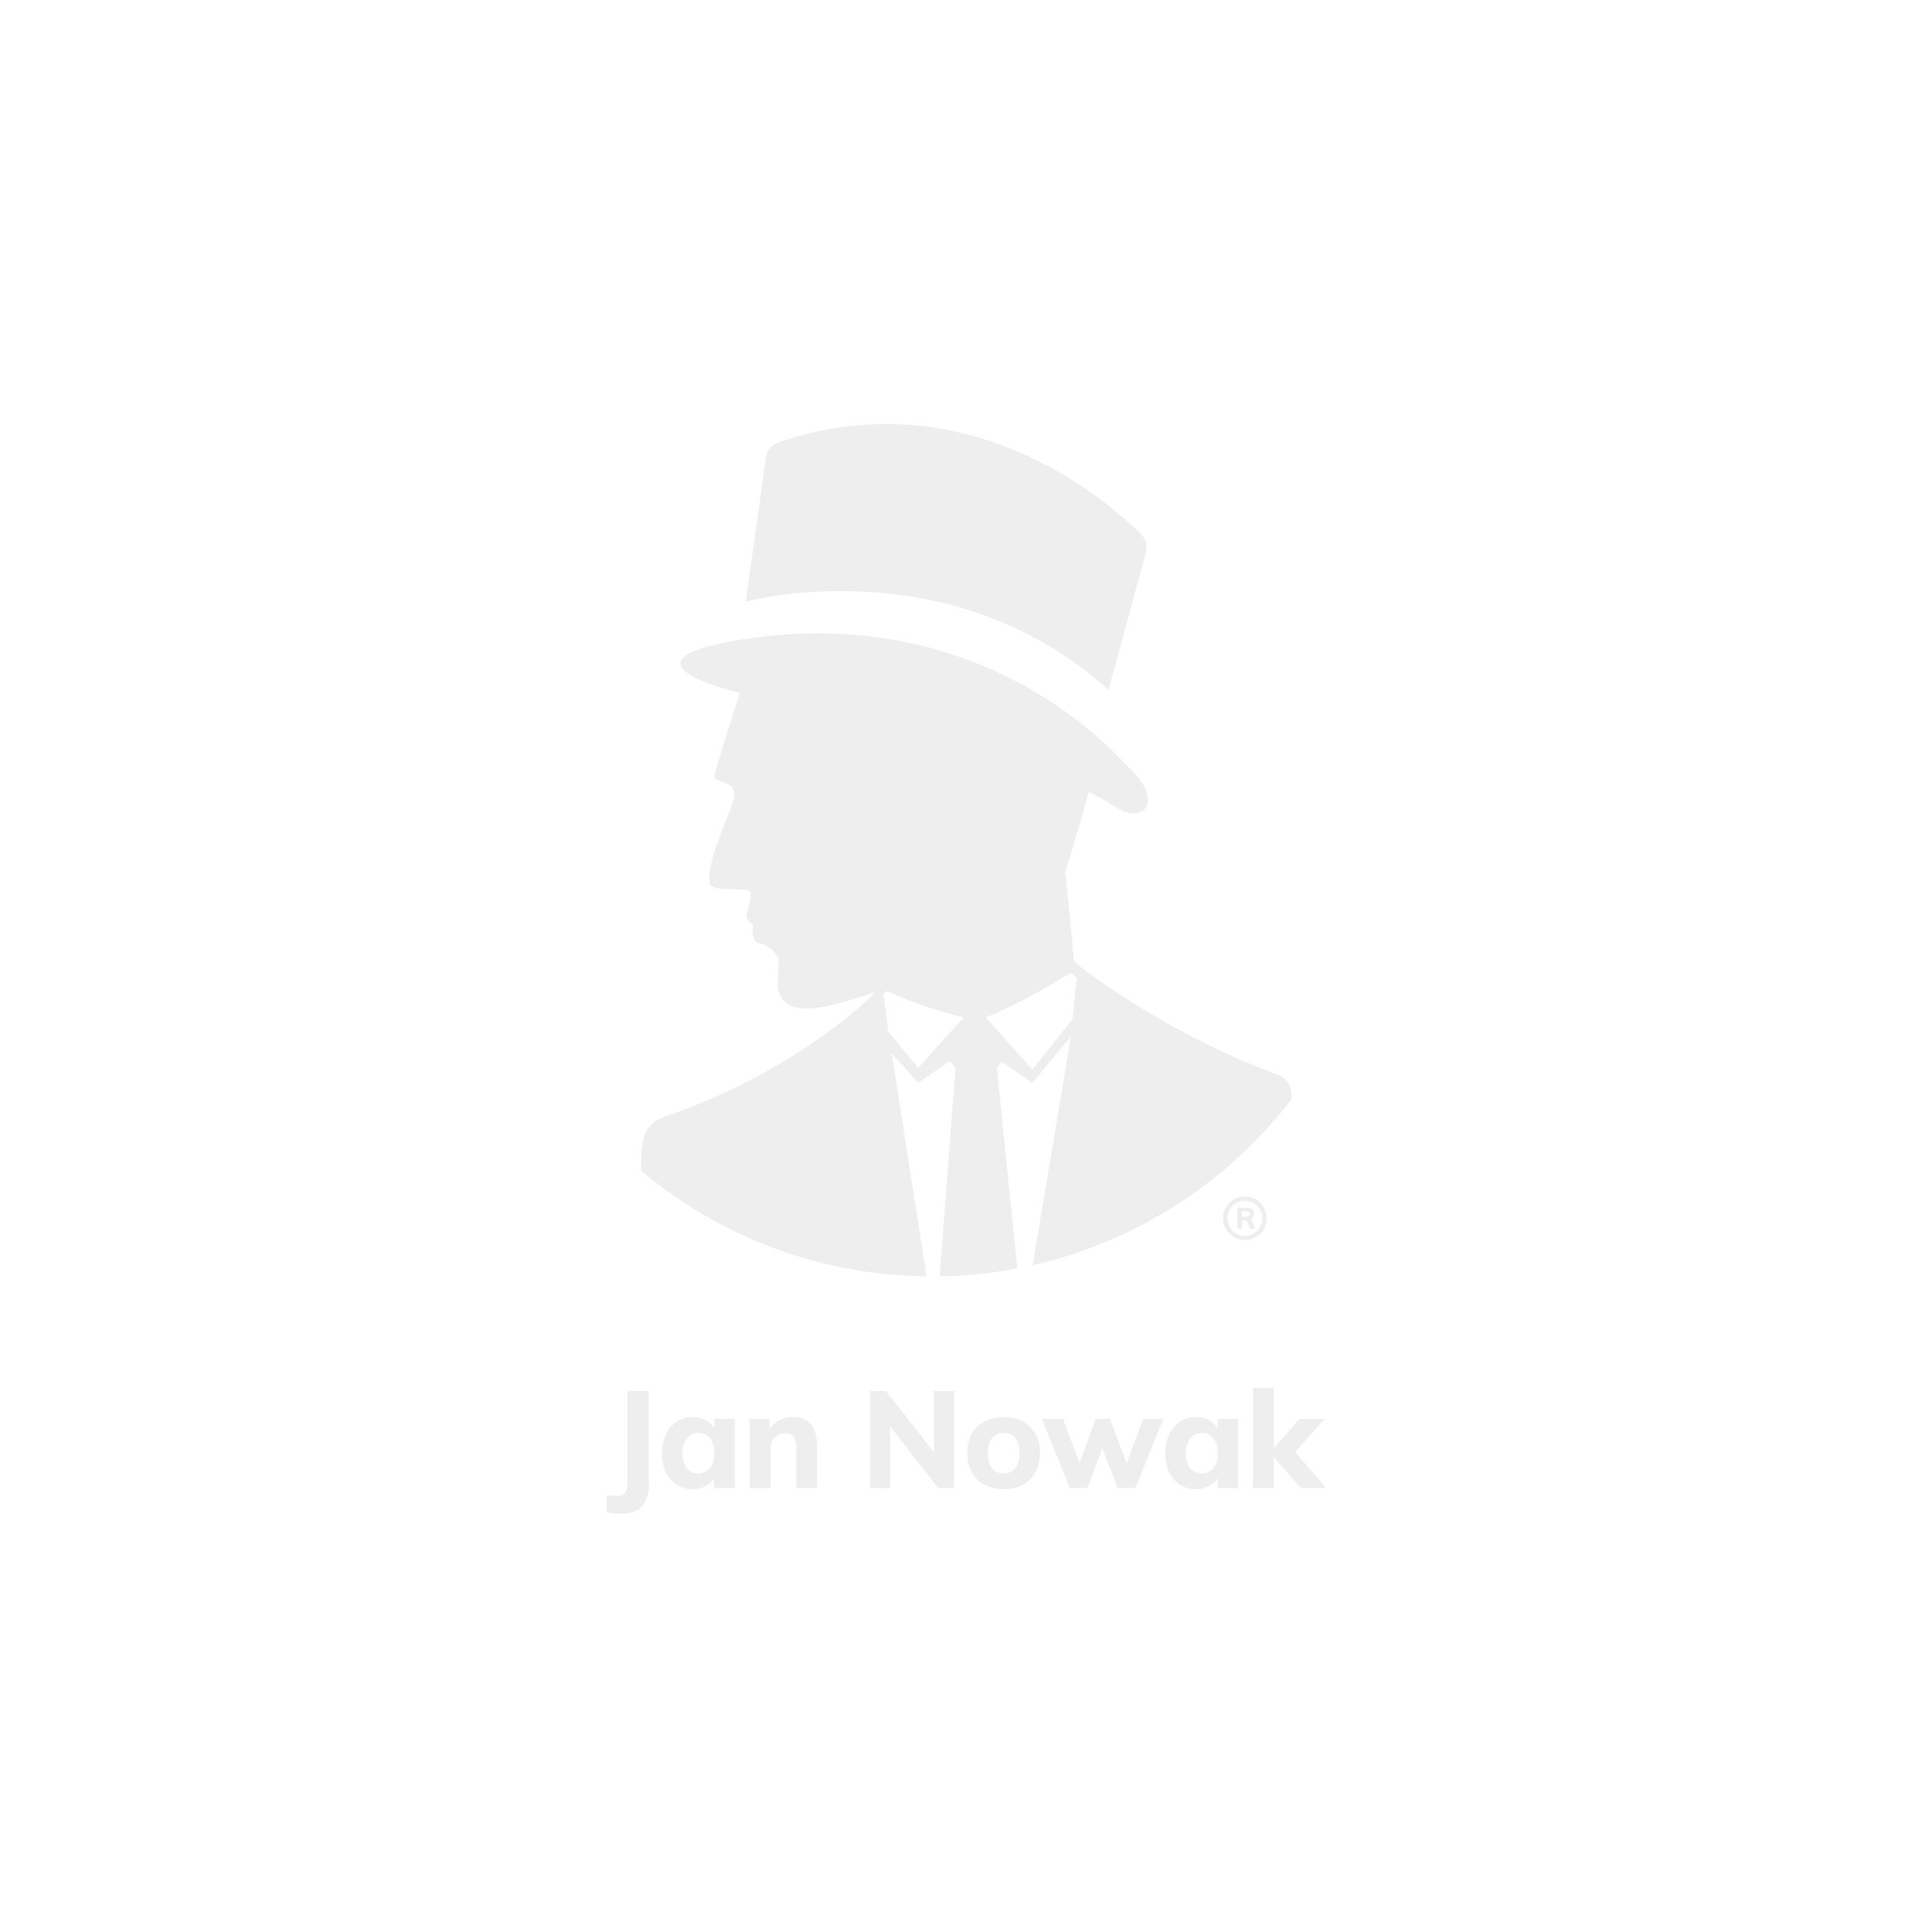 JAN NOWAK model TOMASZ 900x1850x450 biurowa szafa metalowa na akta: antracytowo-biała